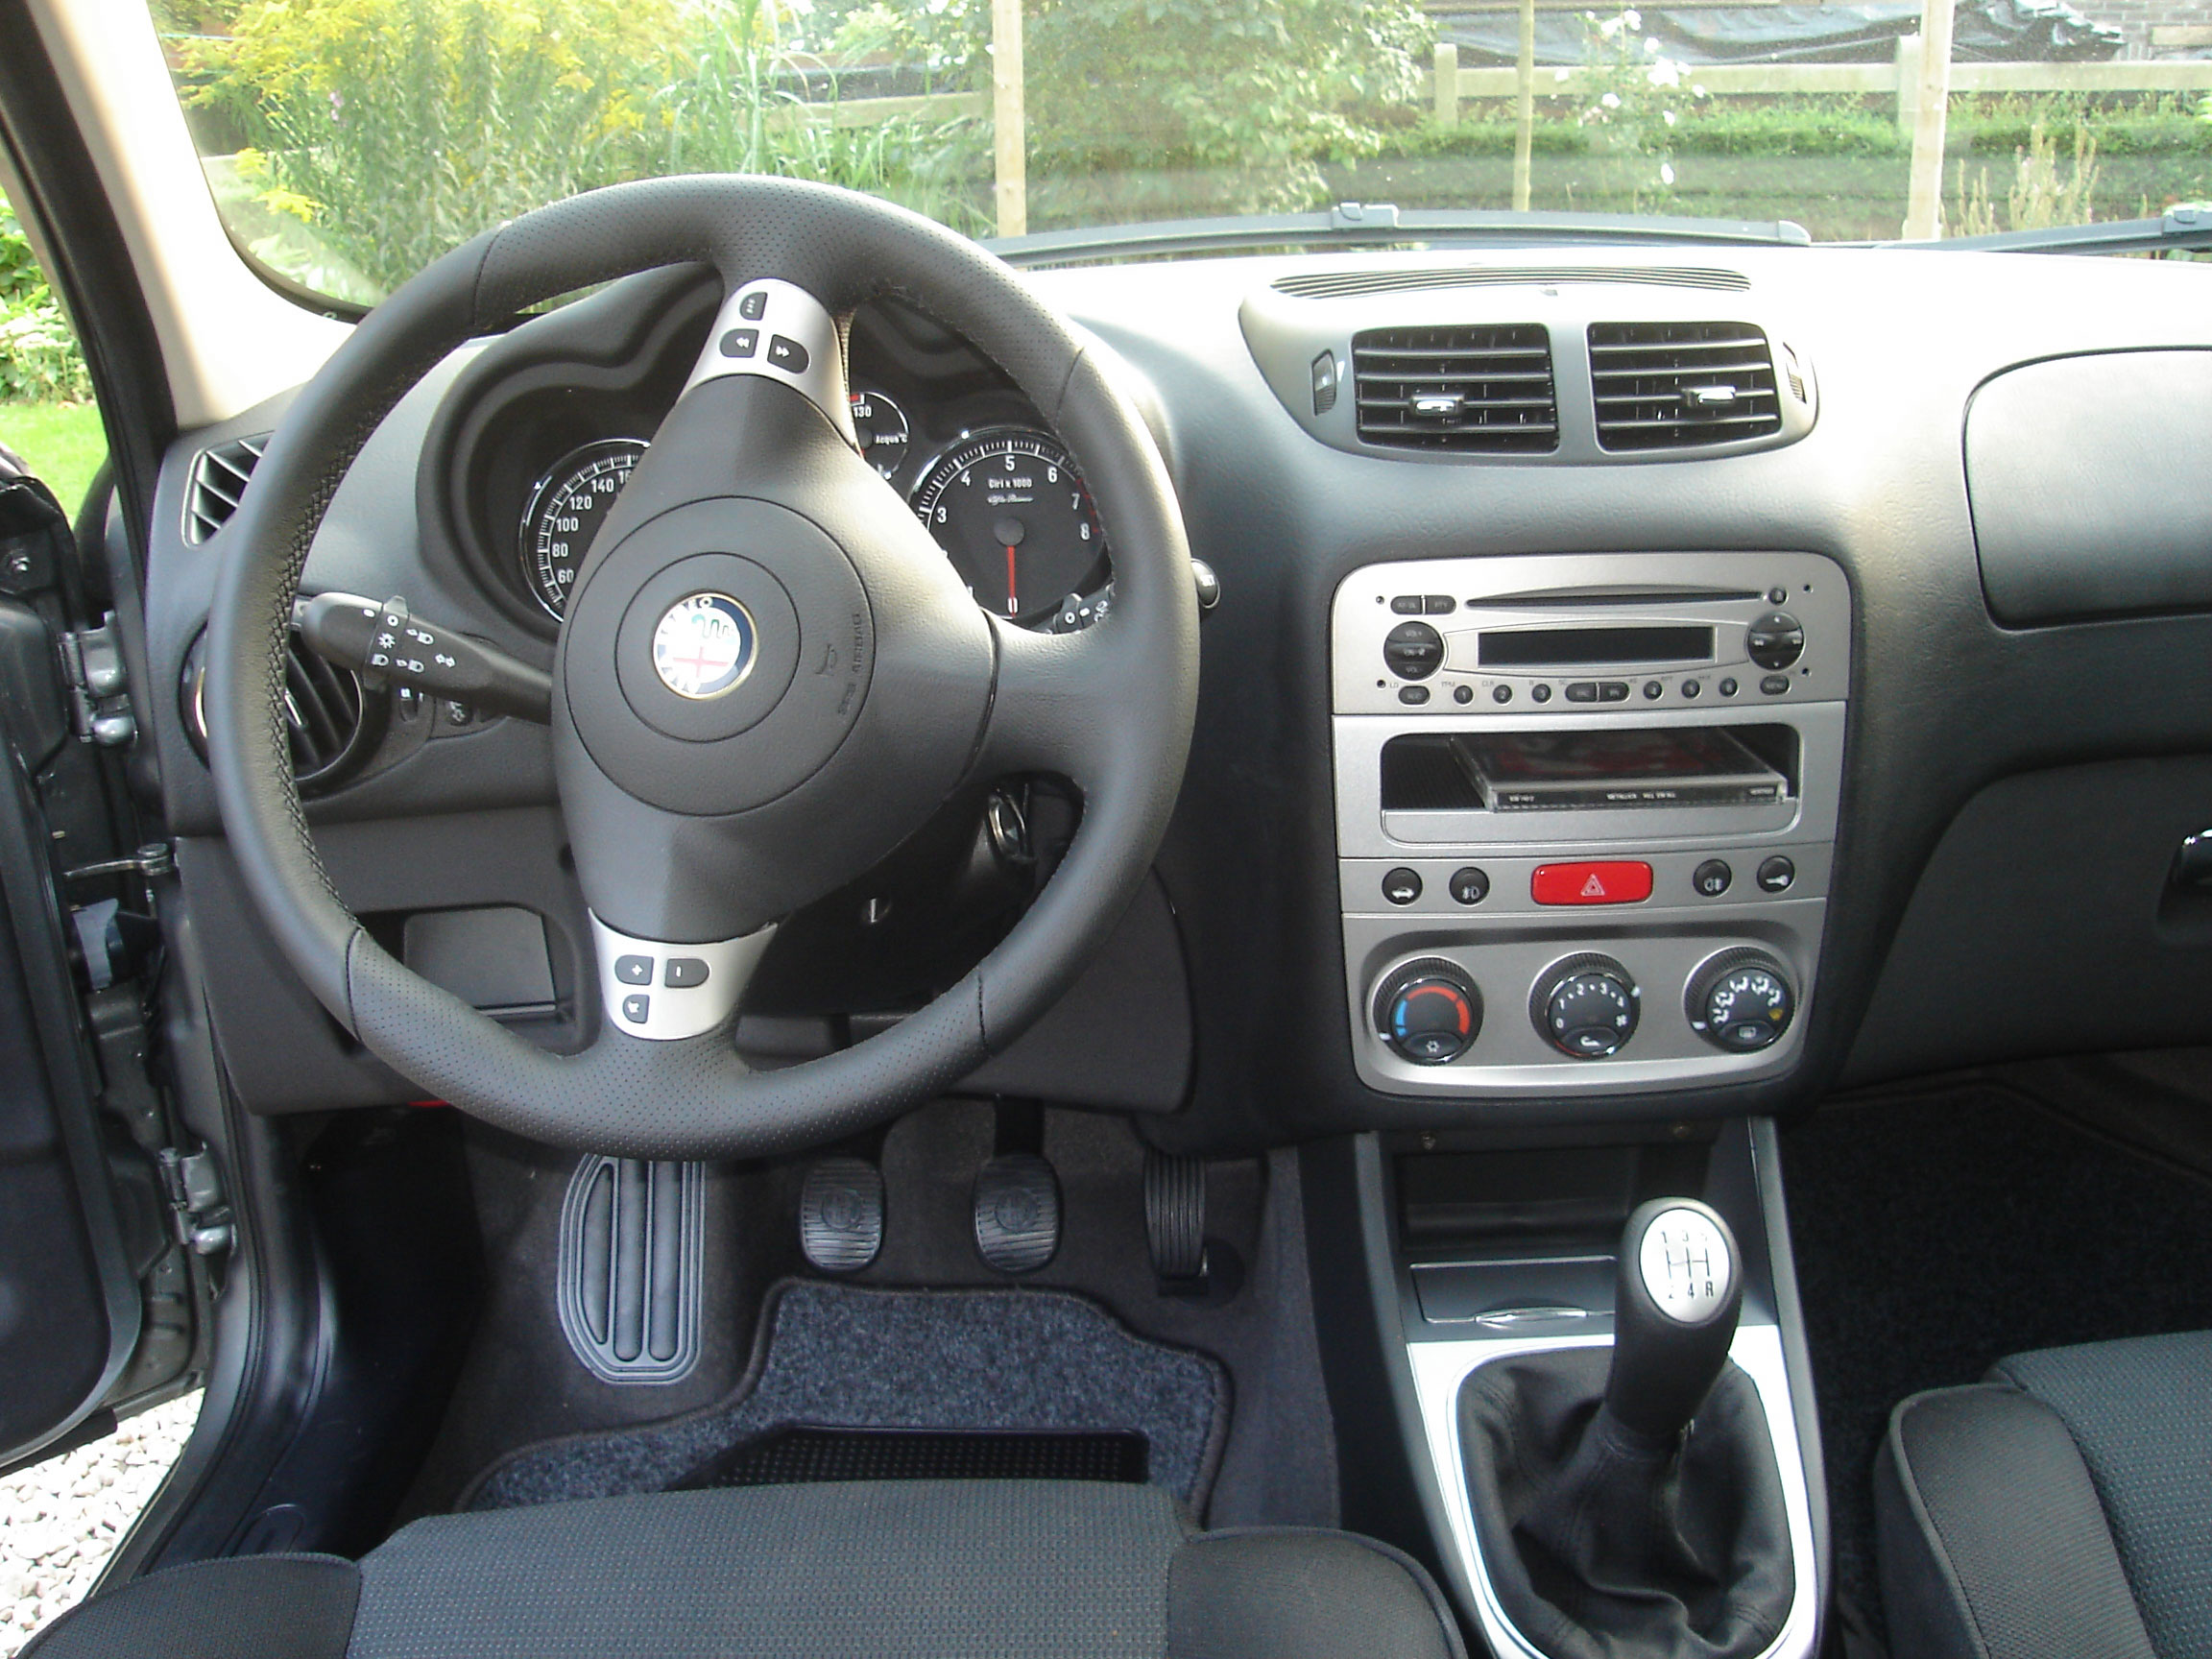 File:Alfa Romeo 147 dashboard.jpg